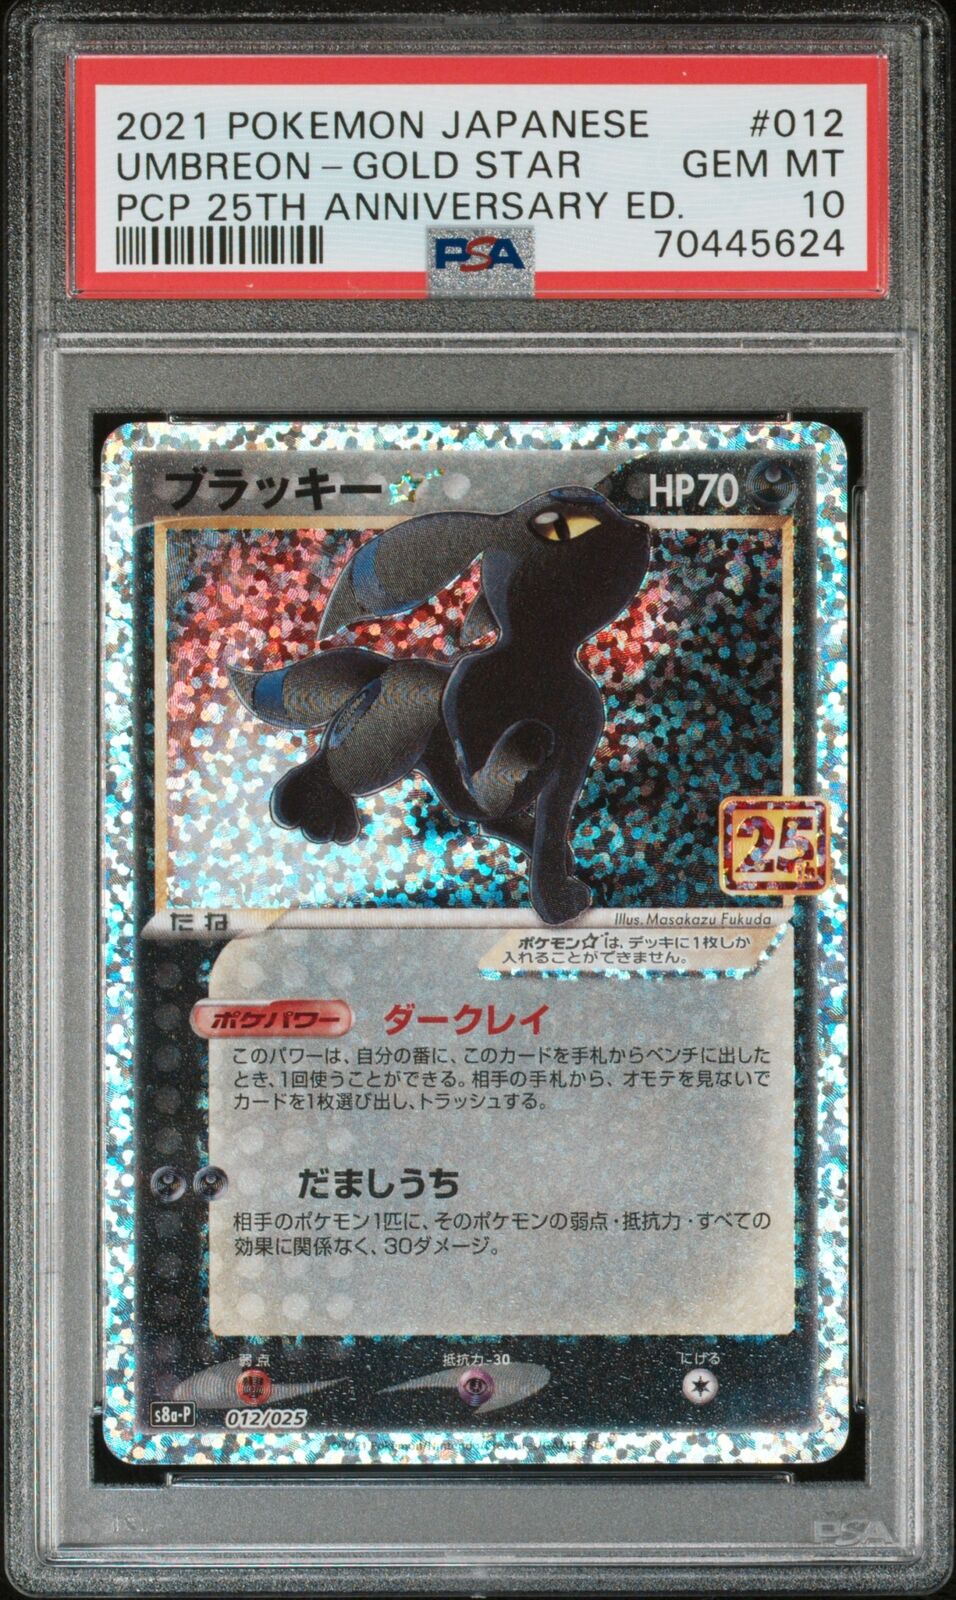 PSA 10 Umbreon Holo Gold Star 012/025 25th Anniversary Japanese Pokemon Card